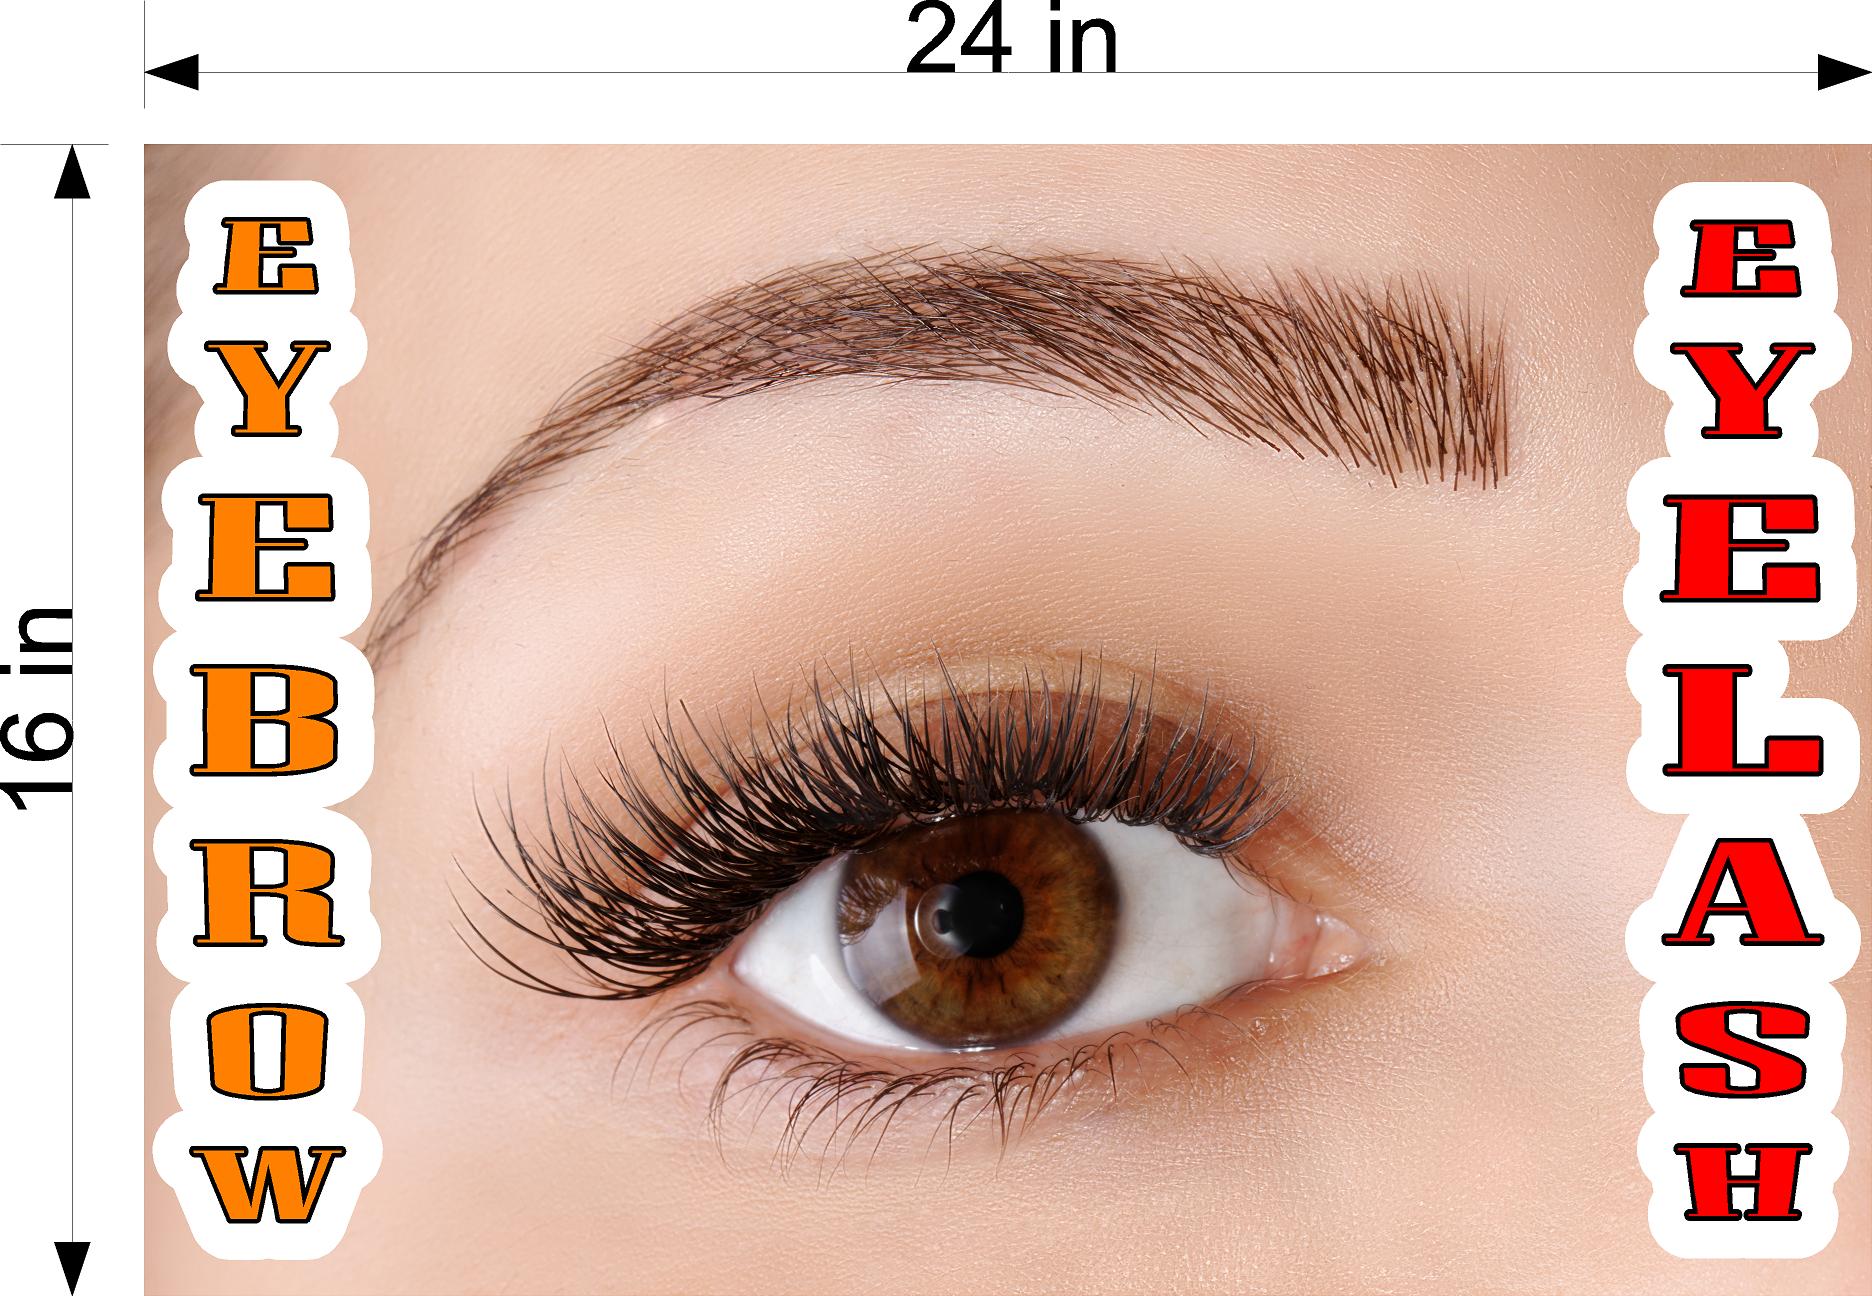 Eyebrows 15 Wallpaper Poster Decal with Adhesive Backing Wall Sticker Decor Indoors Interior Sign Eyelash Horizontal